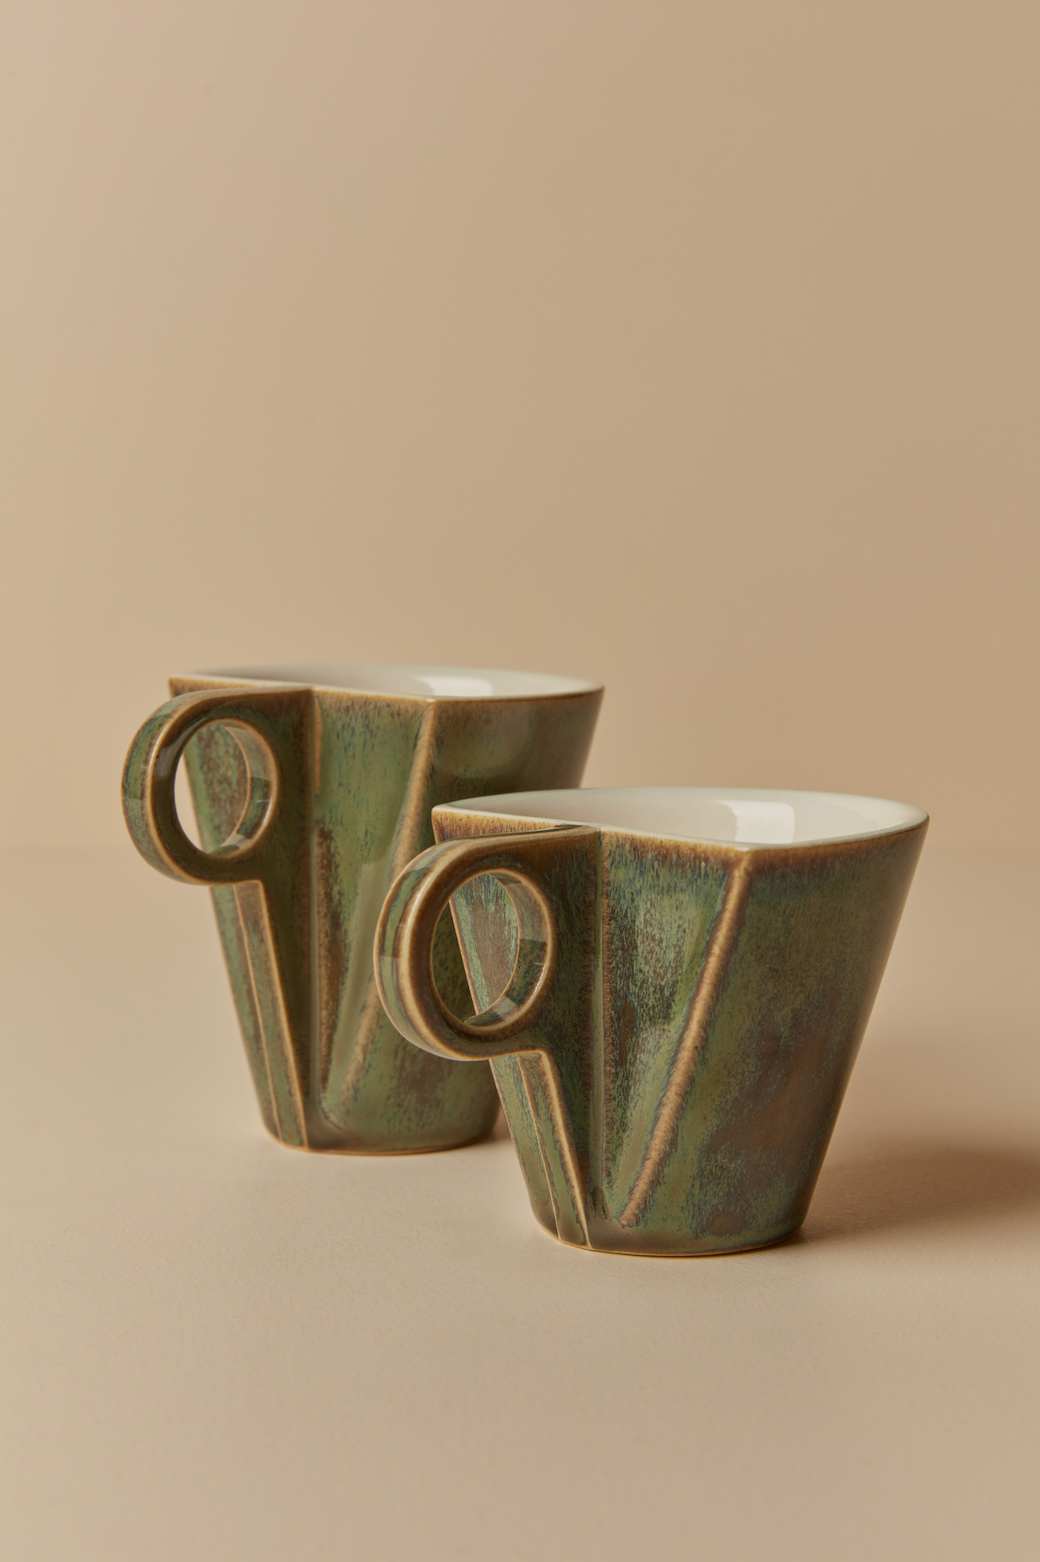 Yuro Cuchor - Small Deco Mug, Iridescent Green and Cream